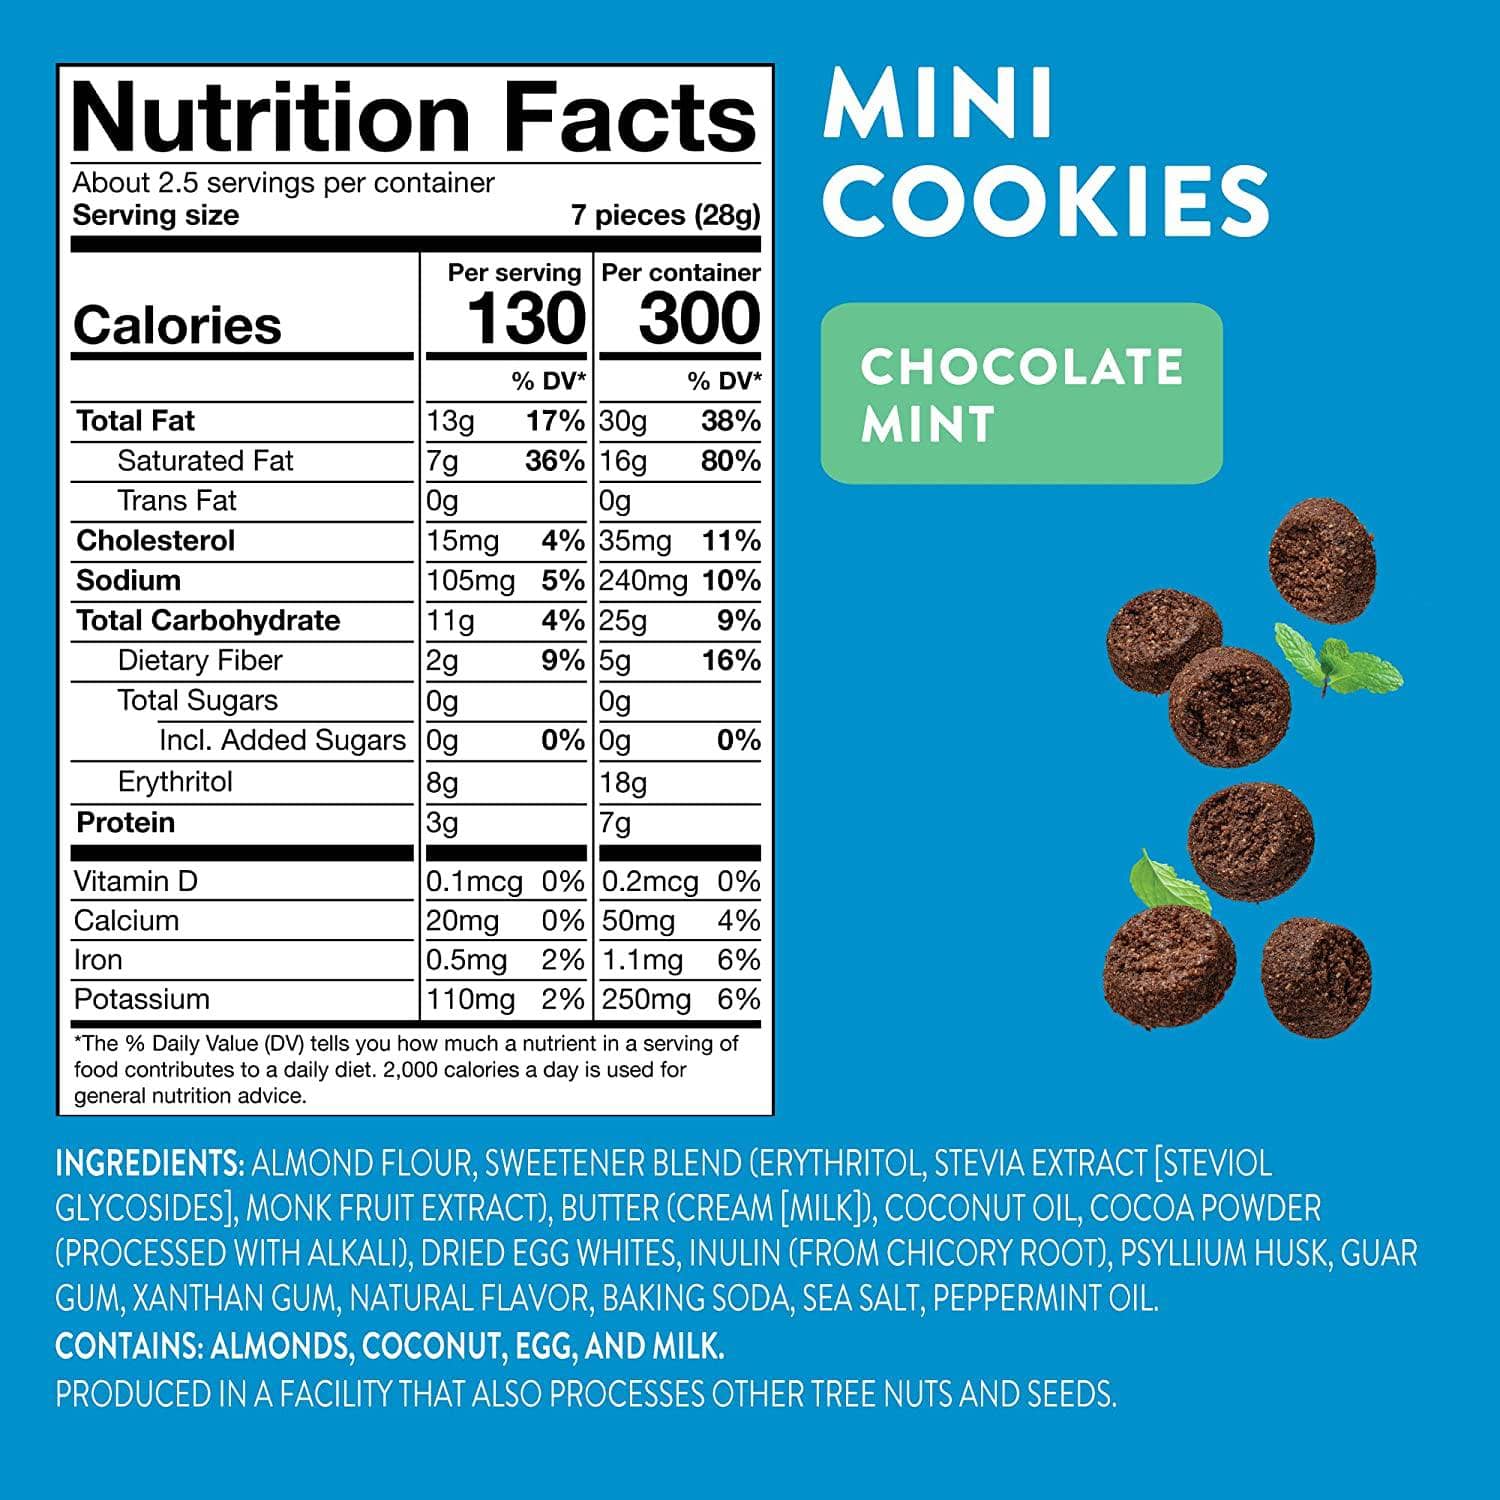 Mini Cookies: Chocolate Mint